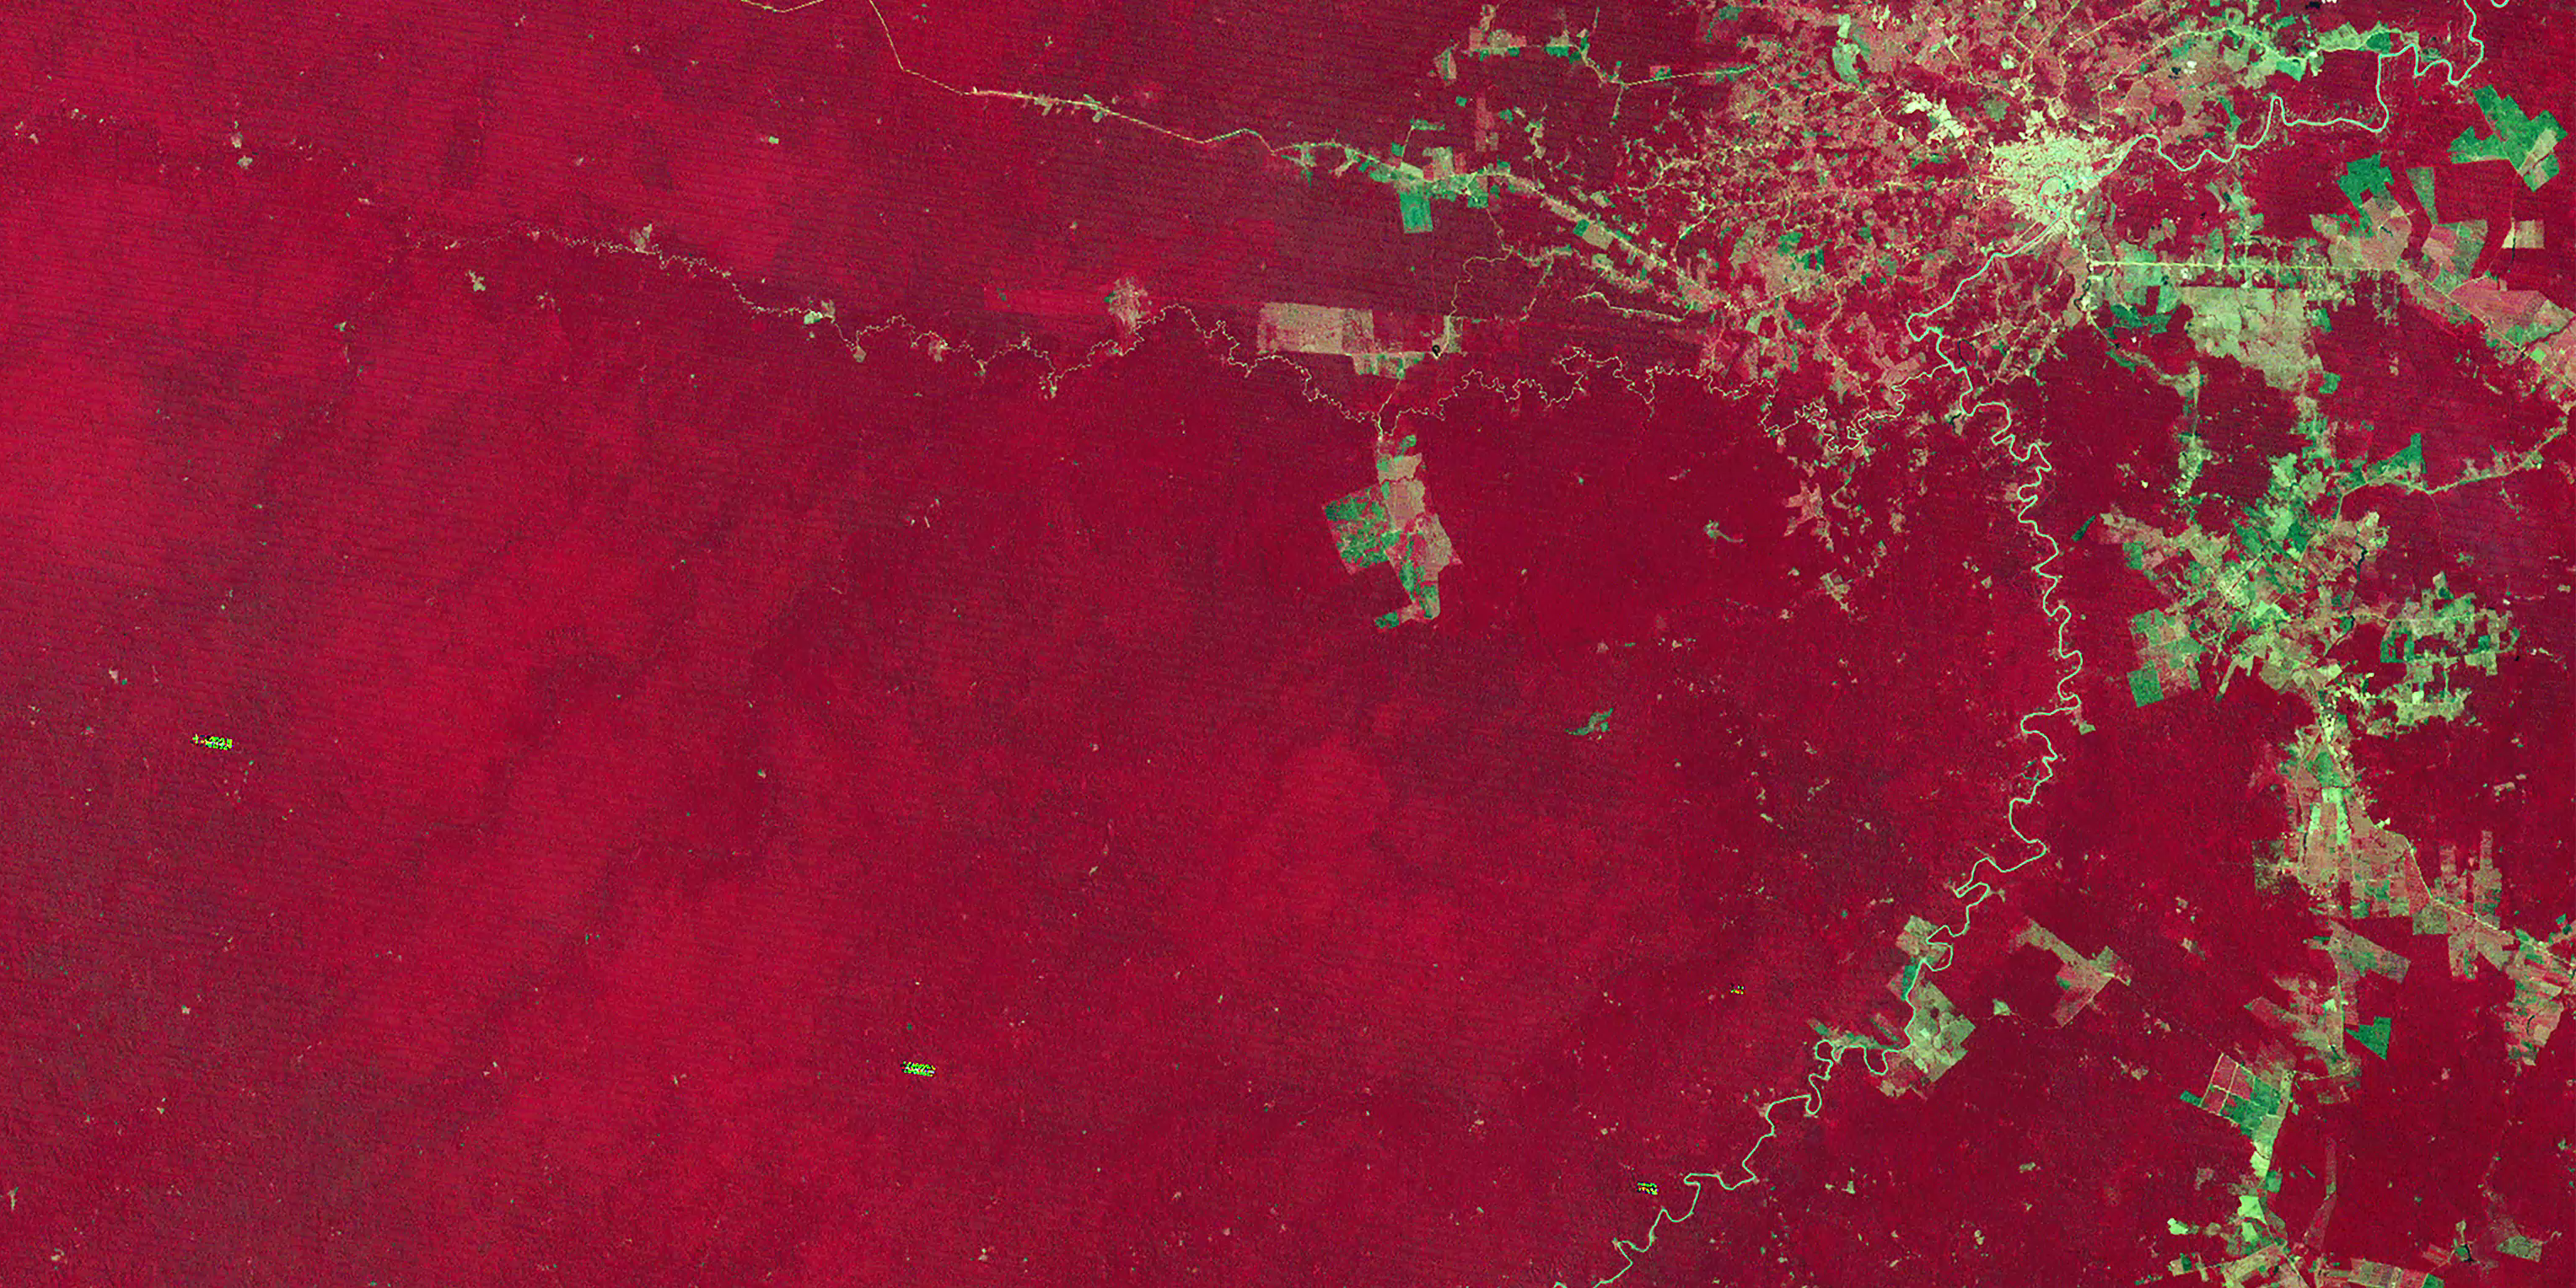 Amazon rainforest: Satellite image © ESA